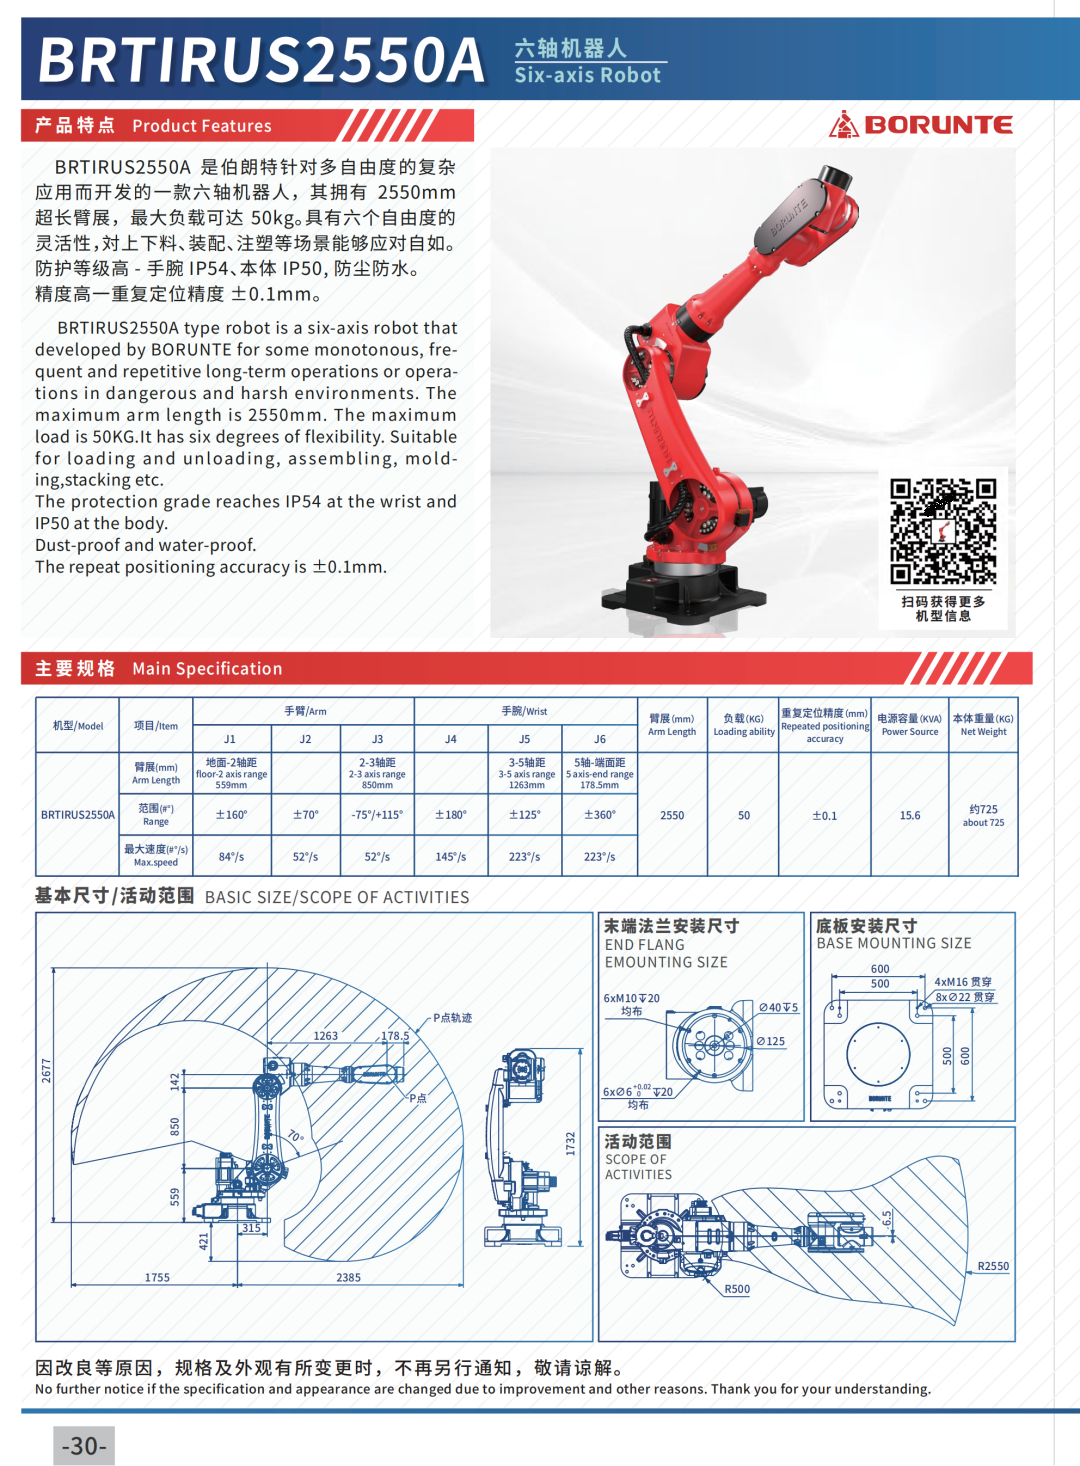 BRTIRWD1506A Six-axis Robot 2